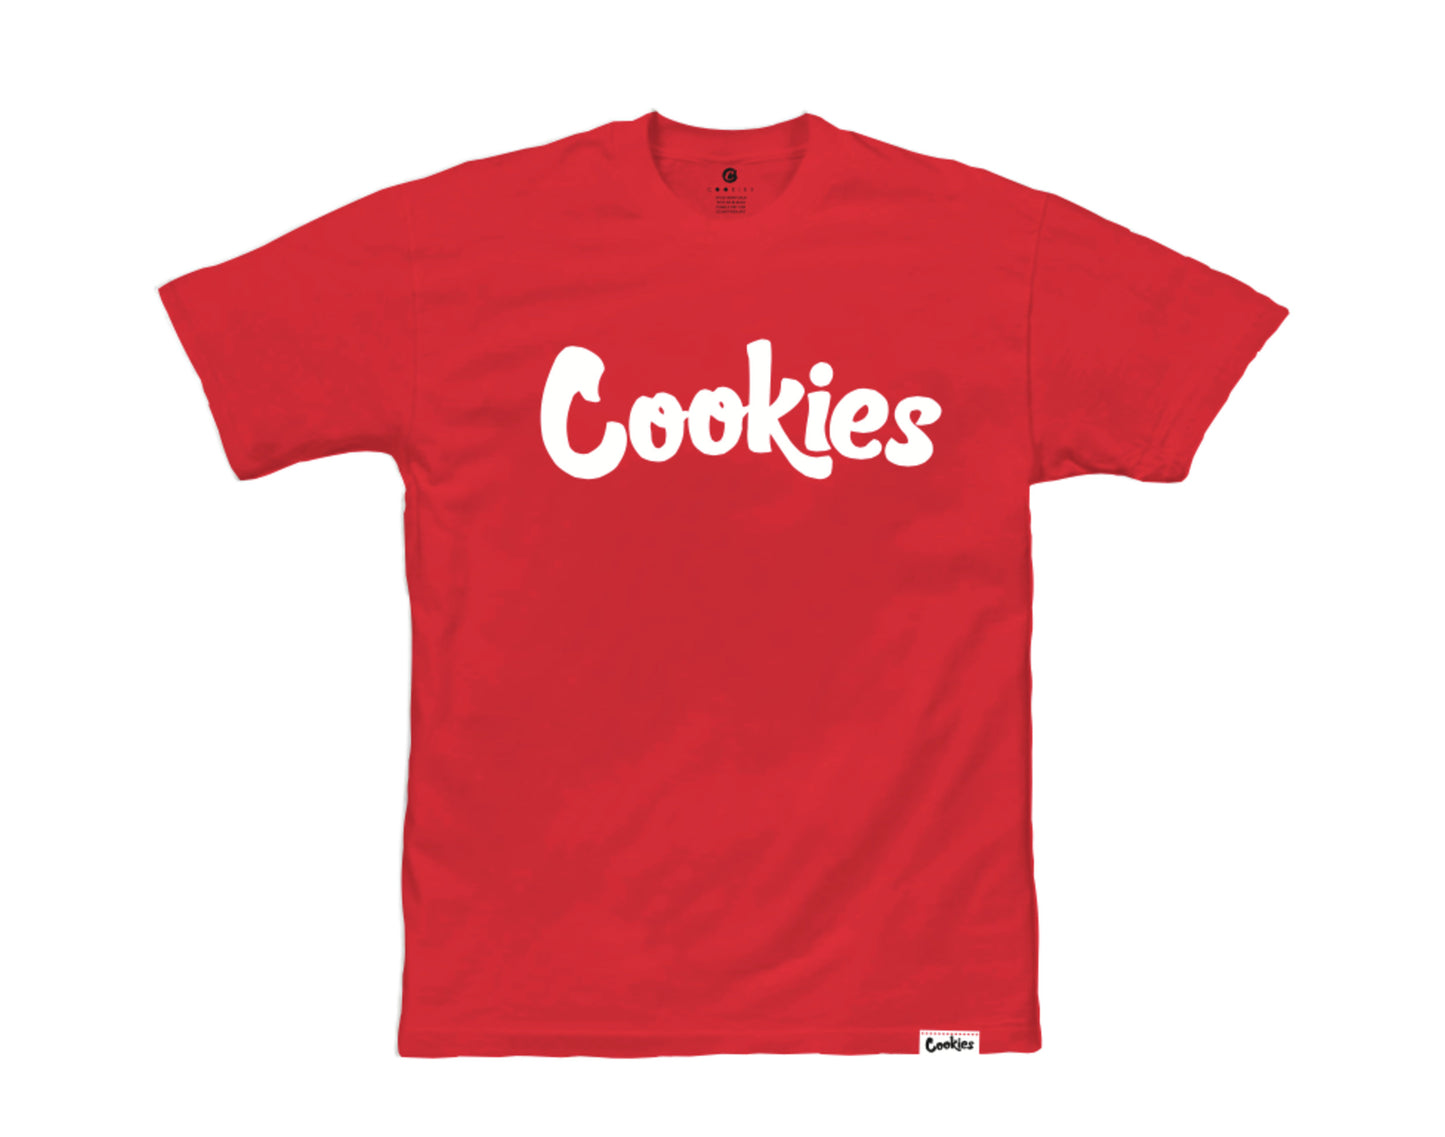 Cookies Original Logo Thin Mint Heather Red/White Men's Tee Shirt 1544T4196-RDW